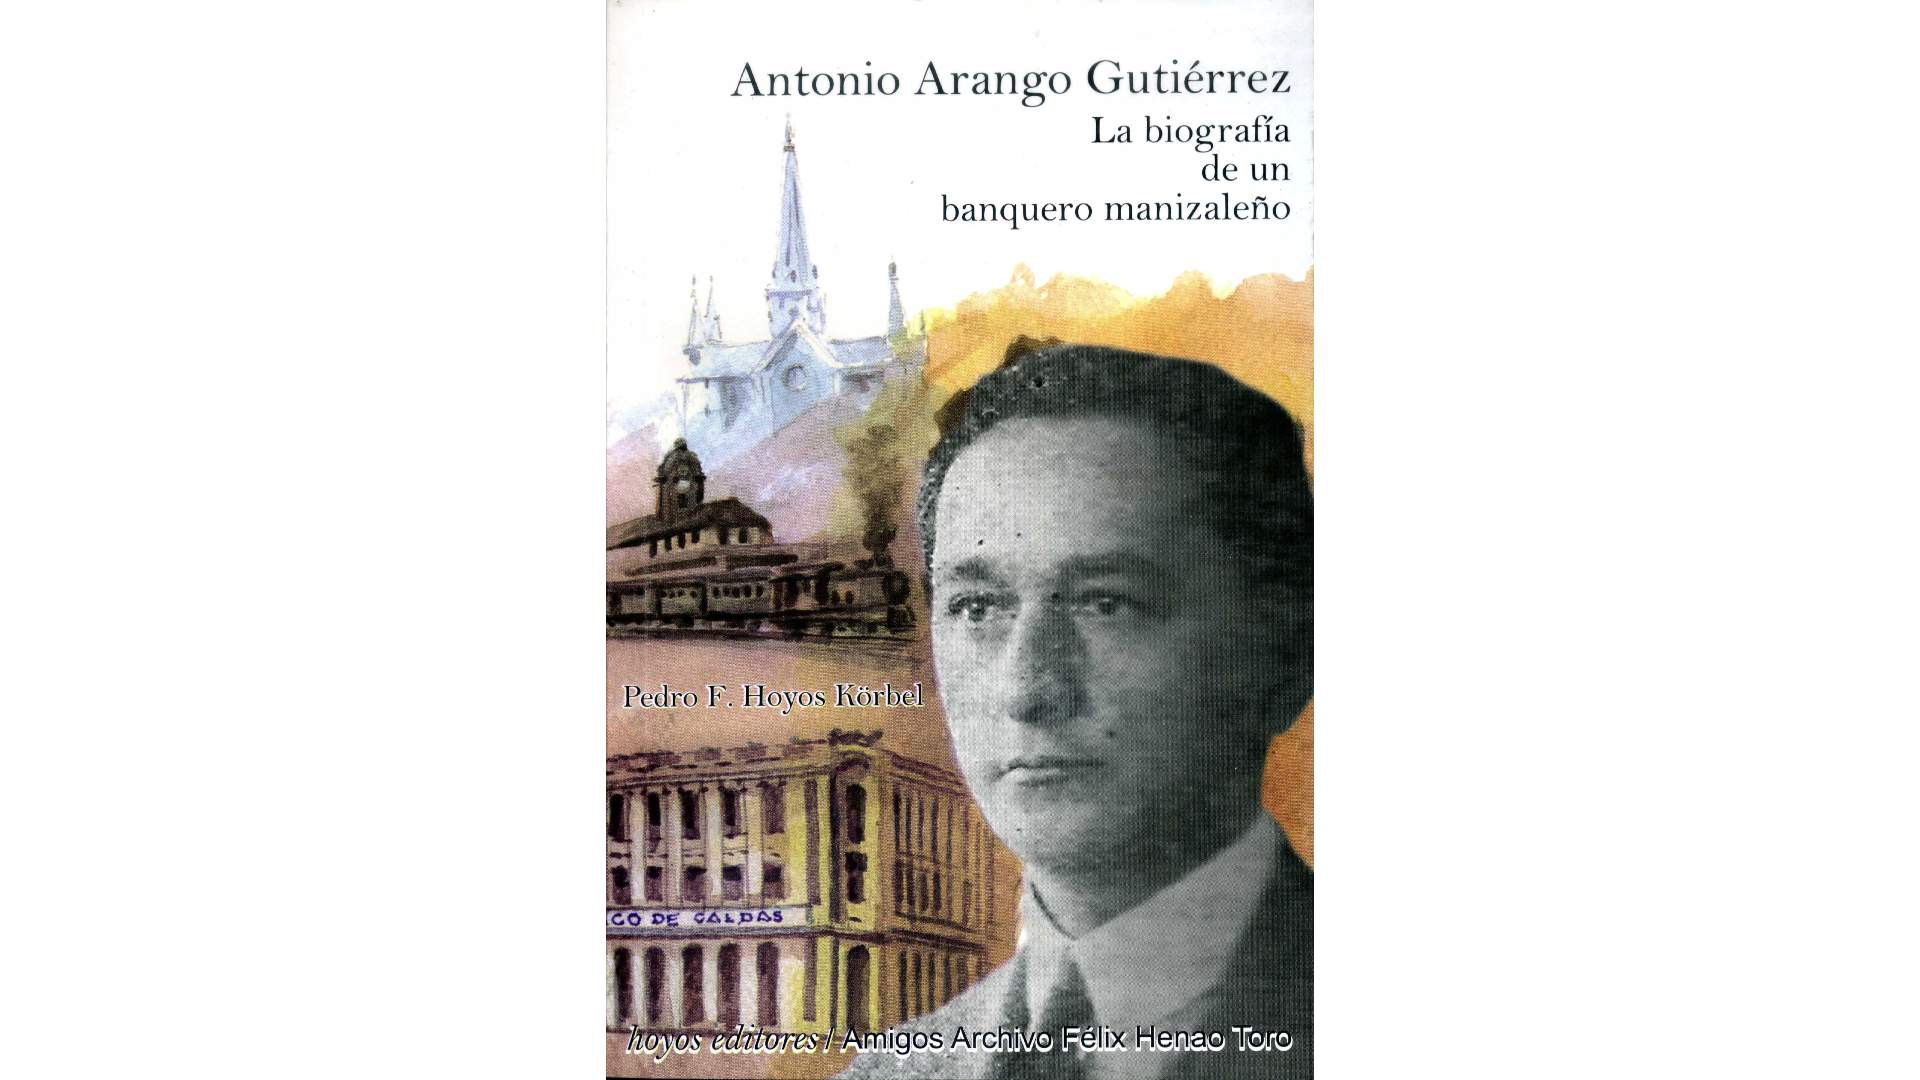 Antonio Arango Gutiérrez: la biografía de un banquero manizaleño (Pedro Felipe Hoyos Körbel)